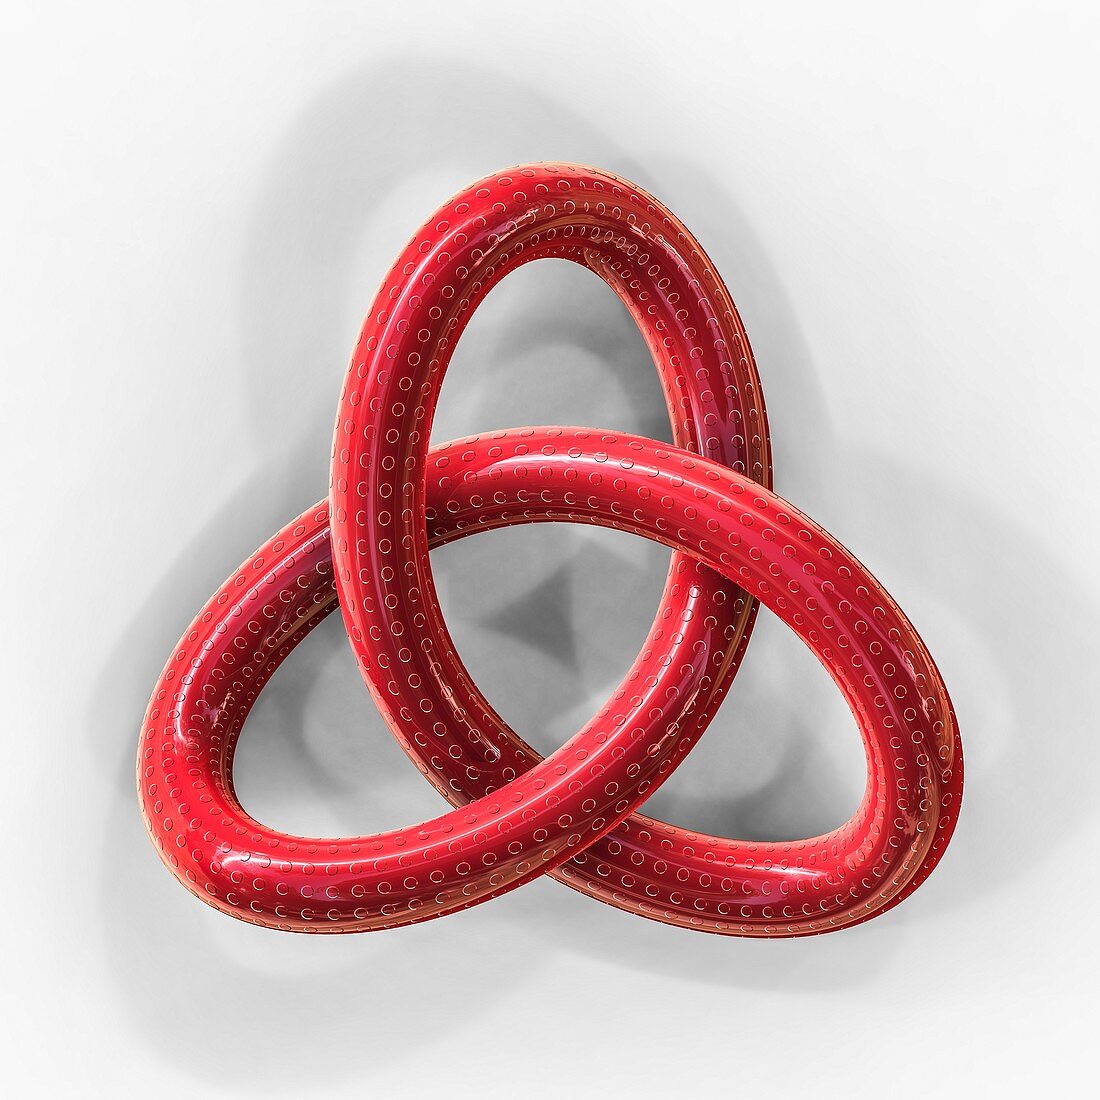 Trefoil knot, illustration